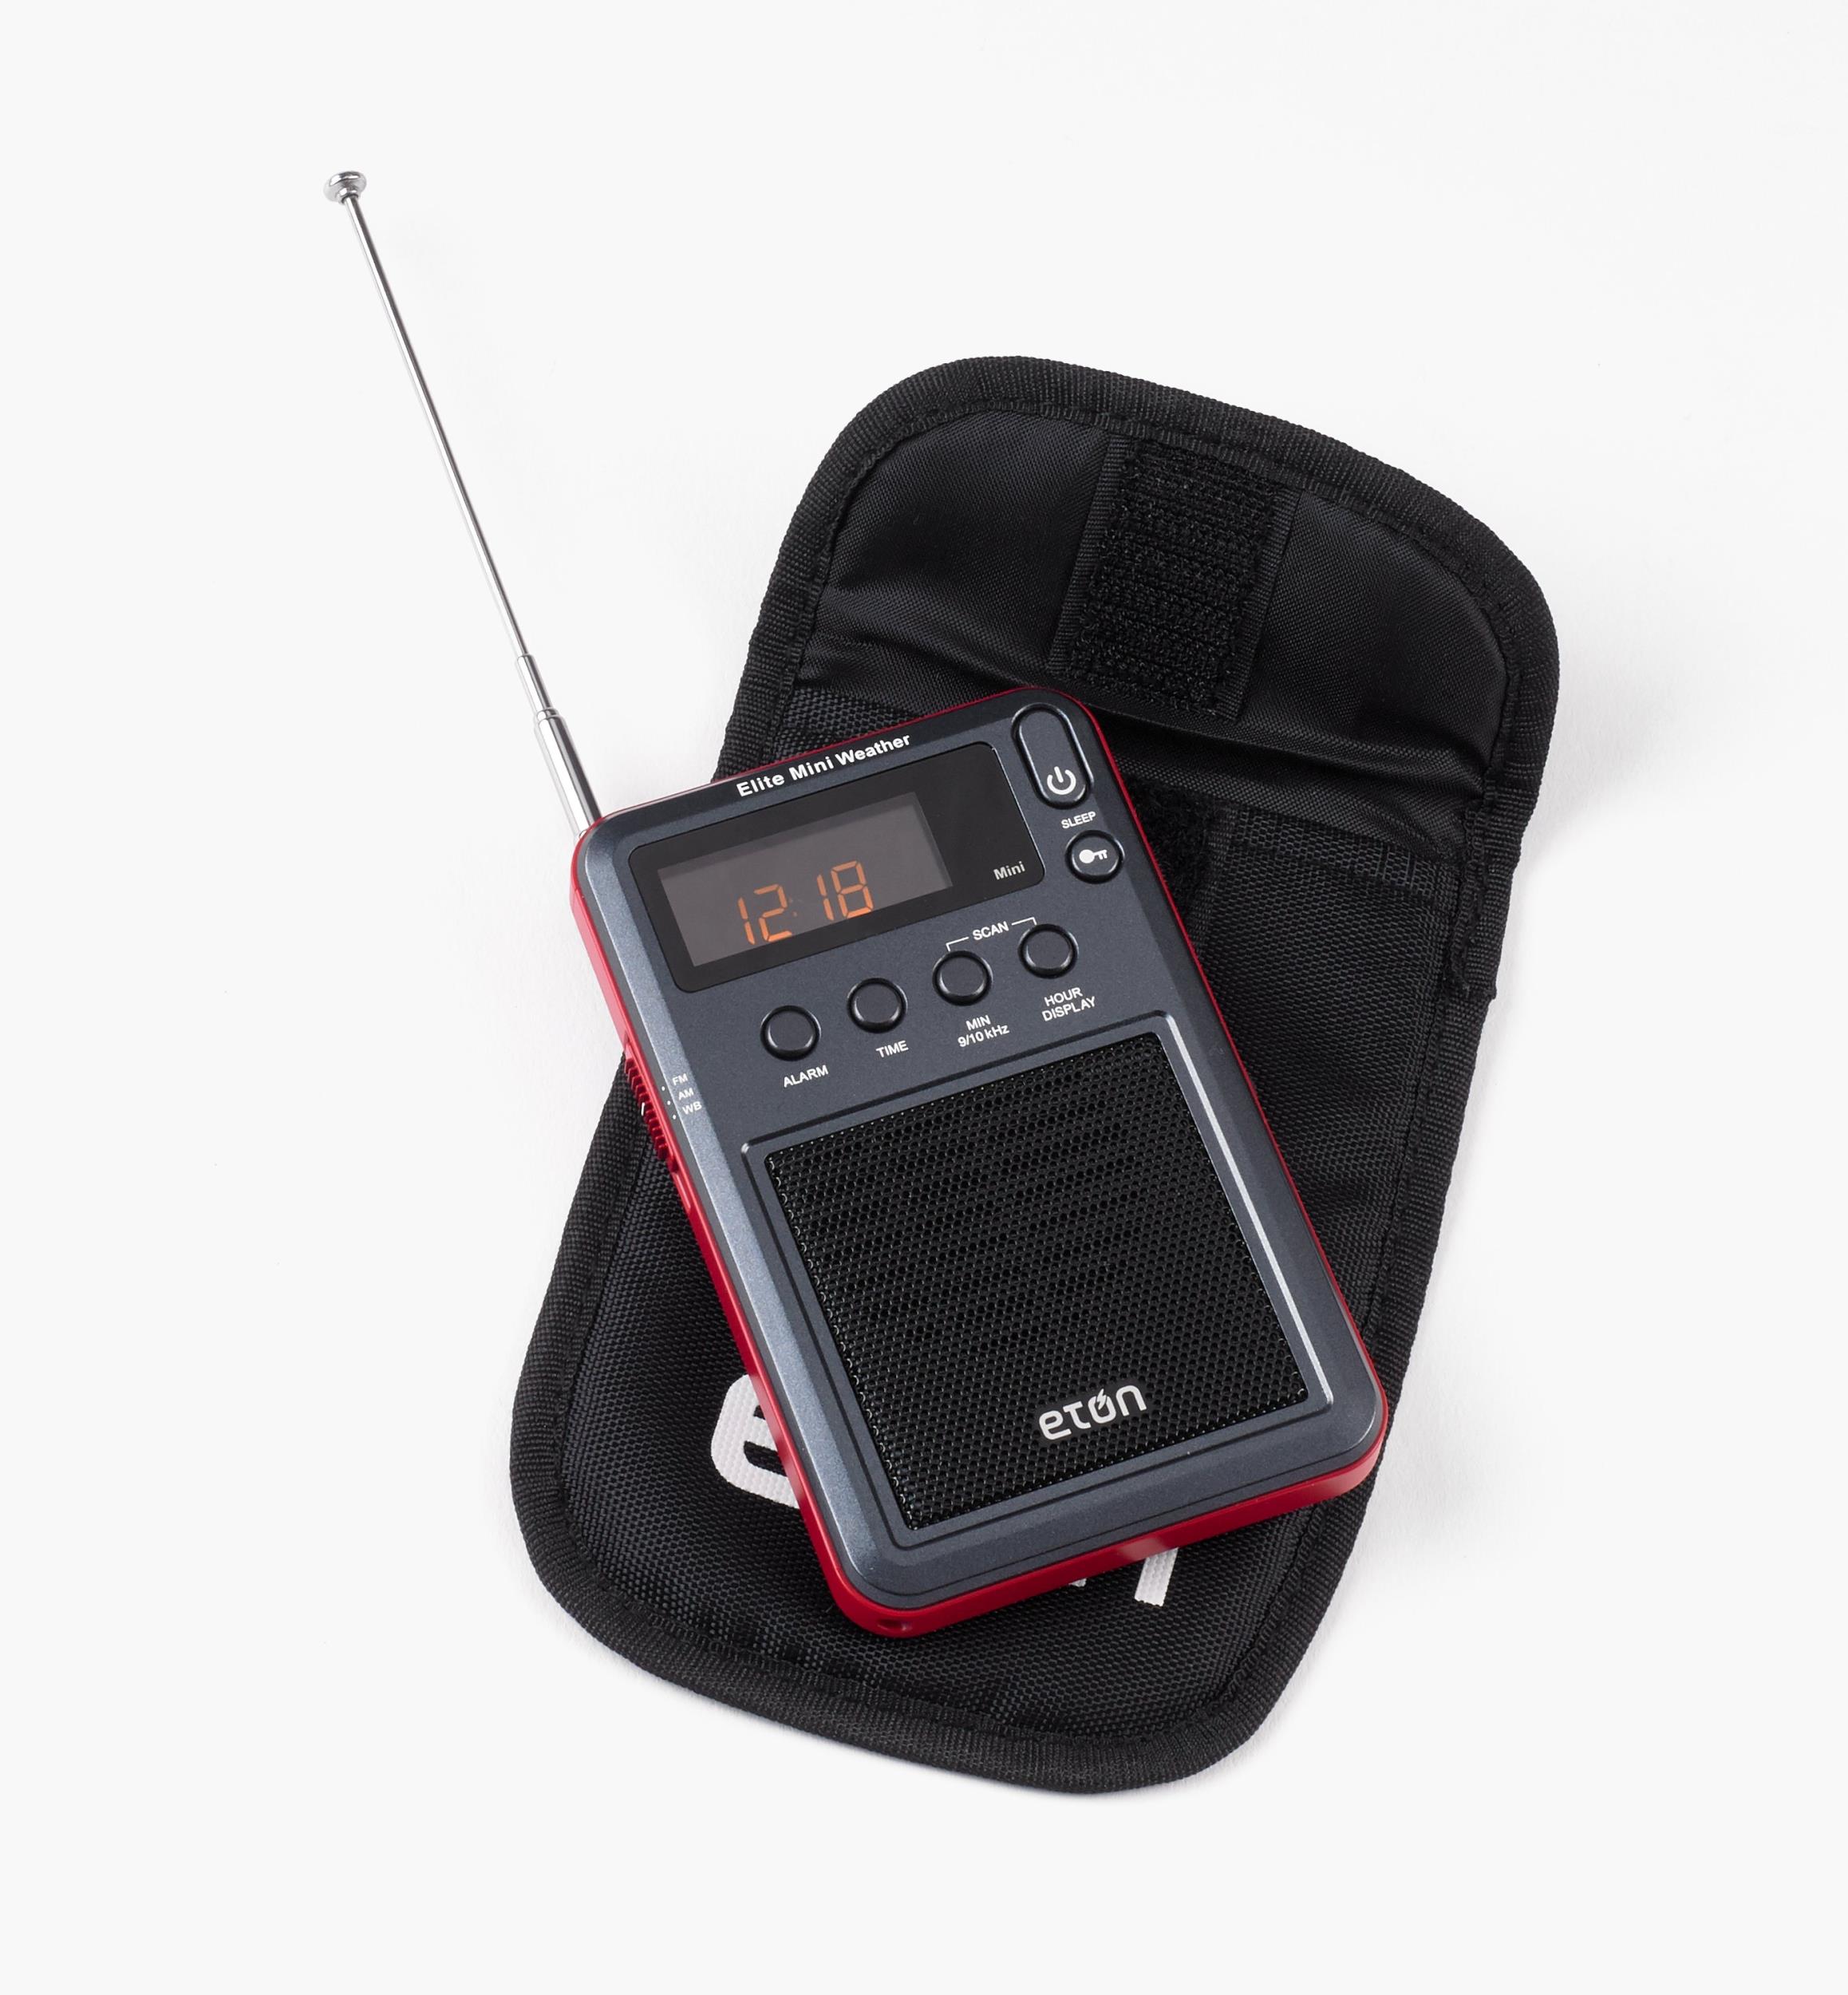 the Ultimate Outdoor Radio with Bluetooth, Eton FR5 Emergency Weather Radio